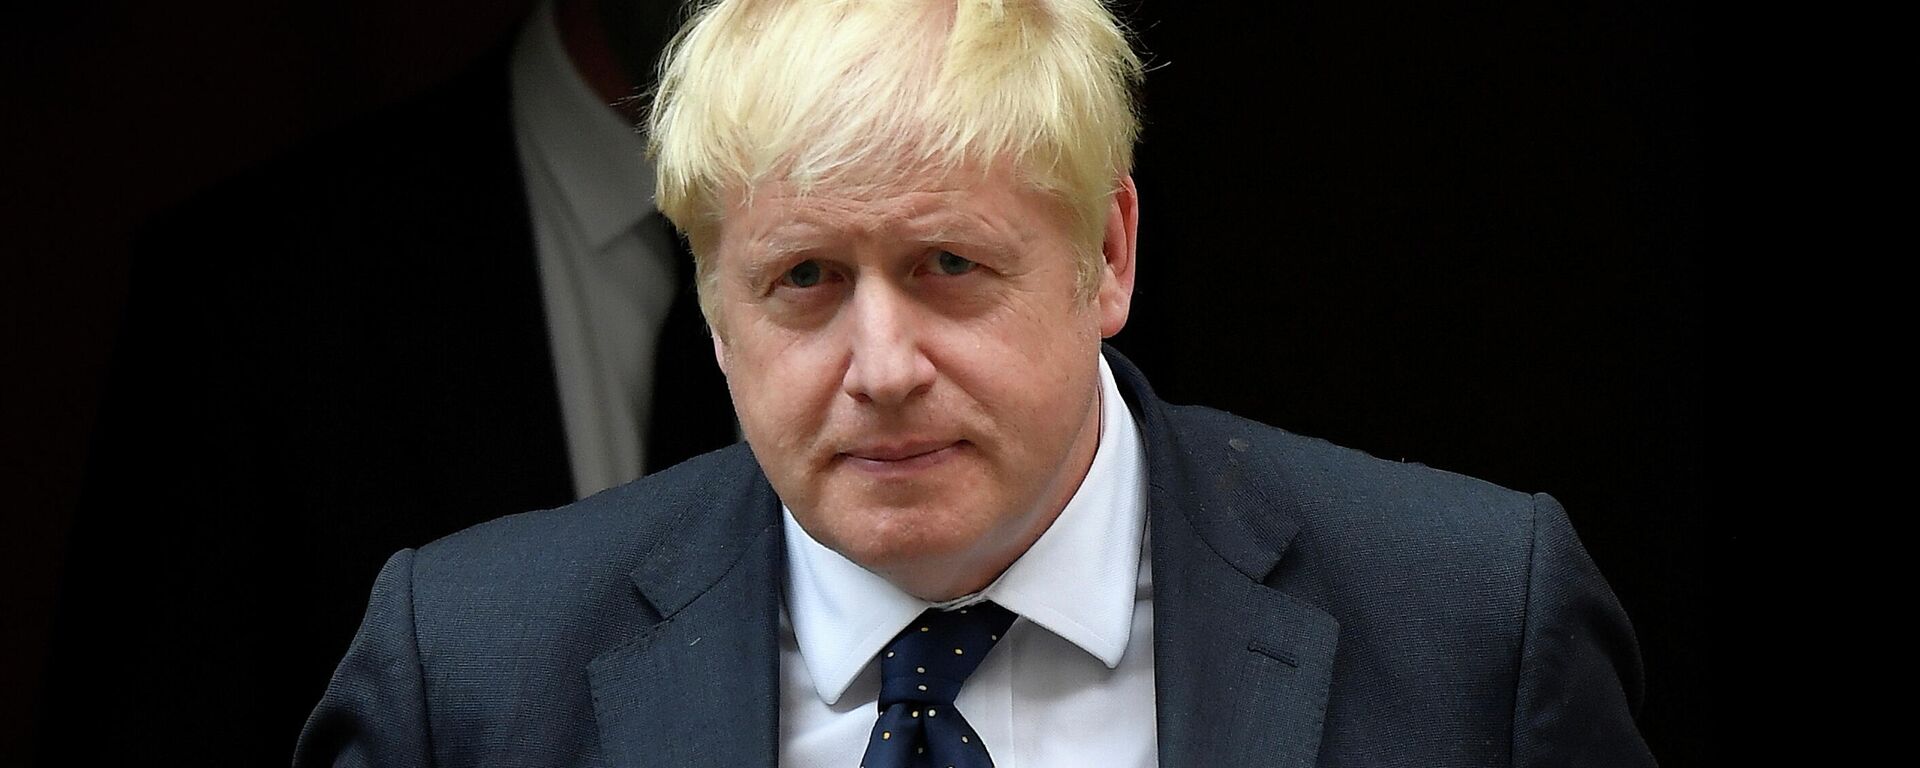 Boris Johnson, primer ministro del Reino Unido - Sputnik Mundo, 1920, 16.09.2021